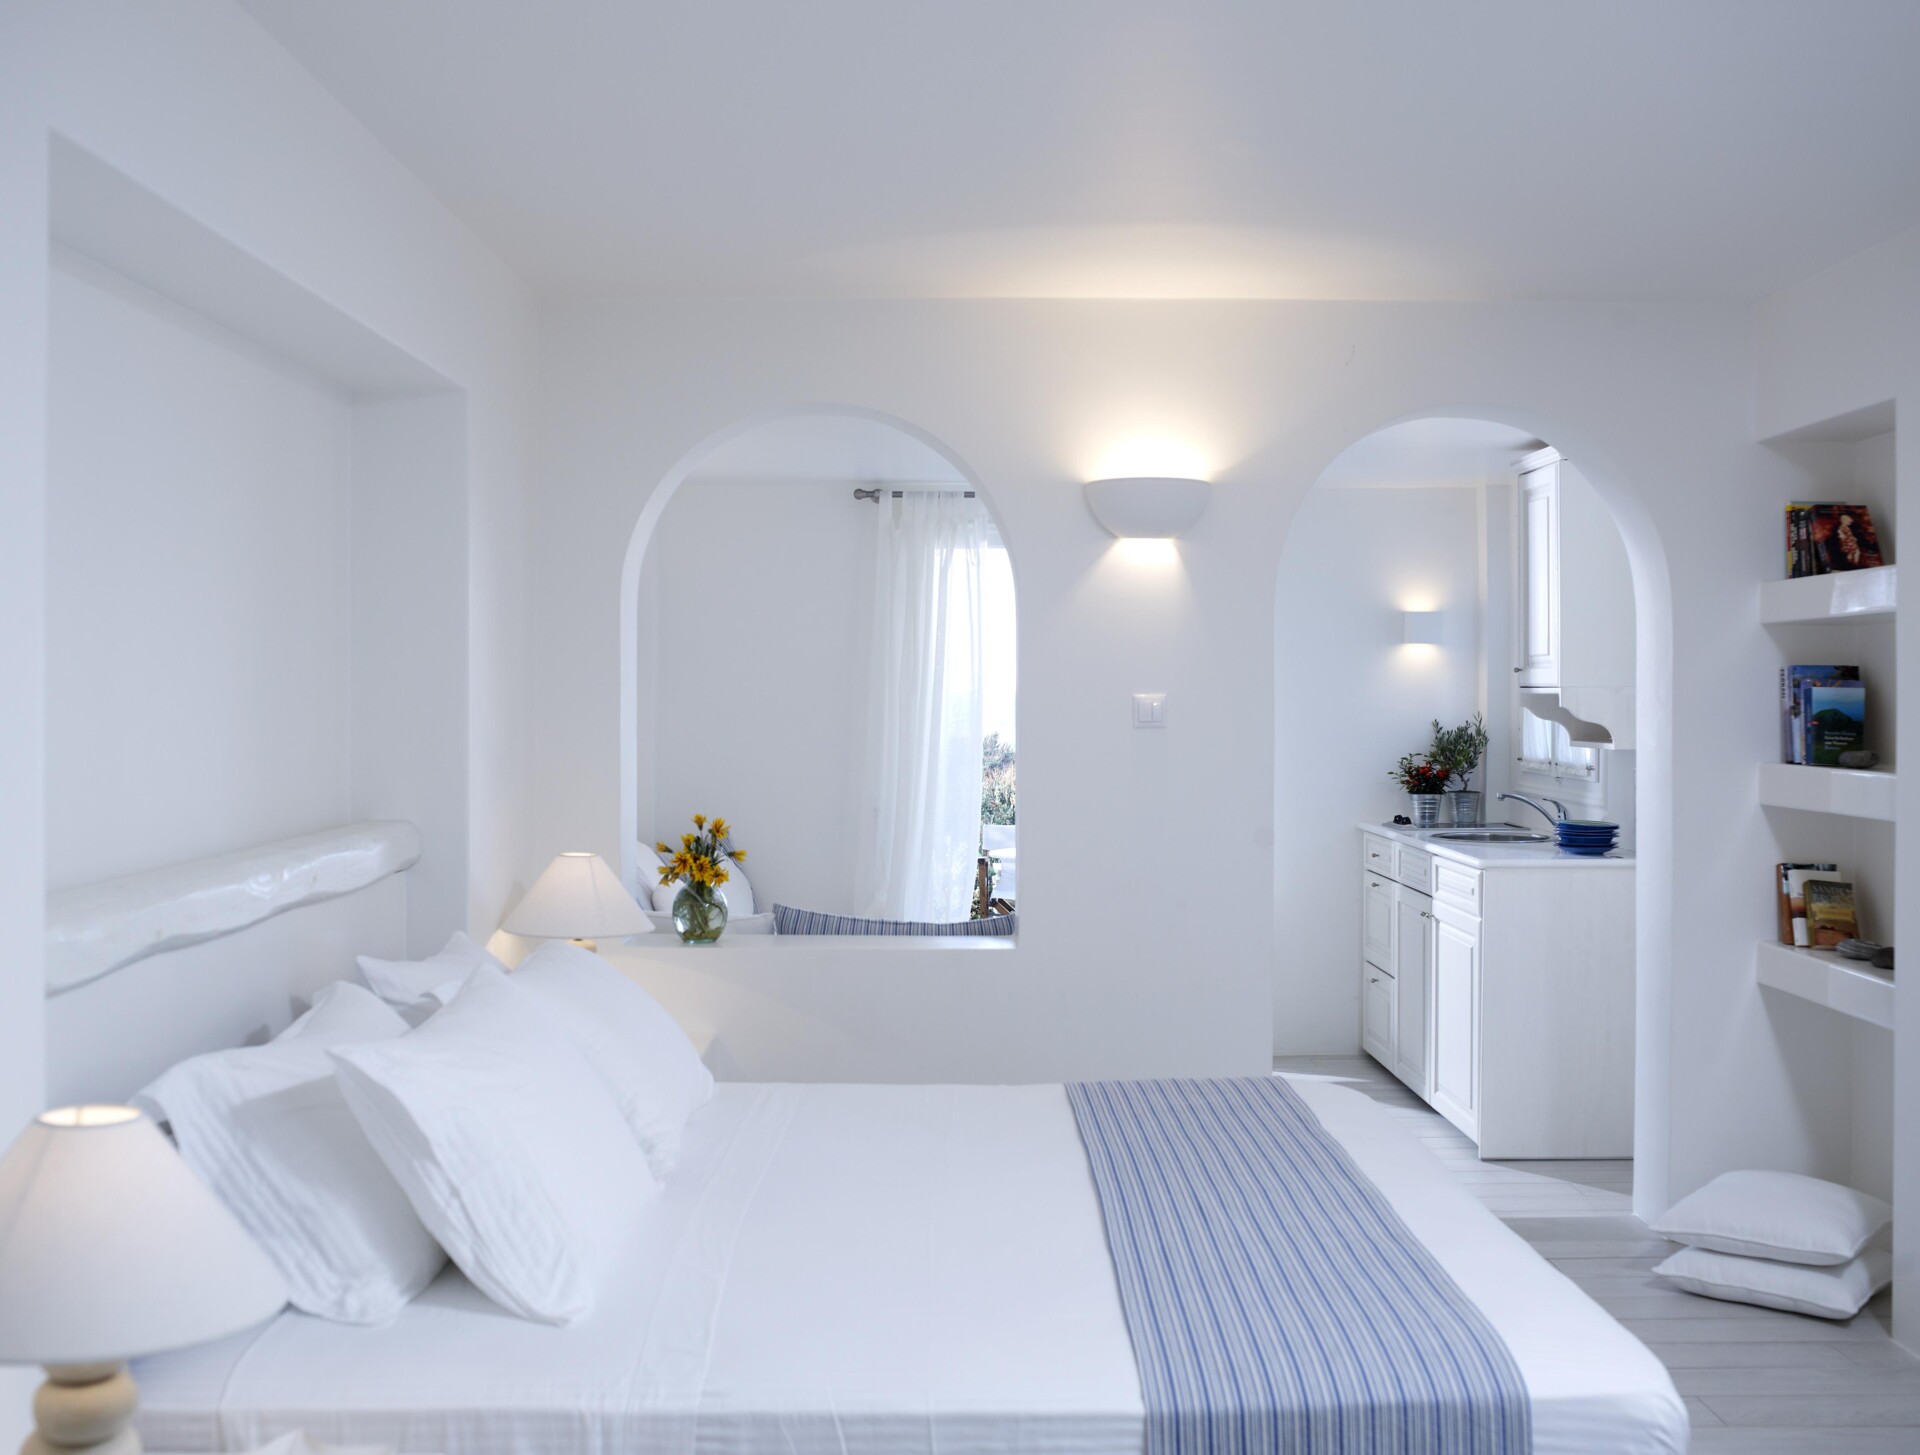 Luxury accommodation in Naxos, Greece interiors